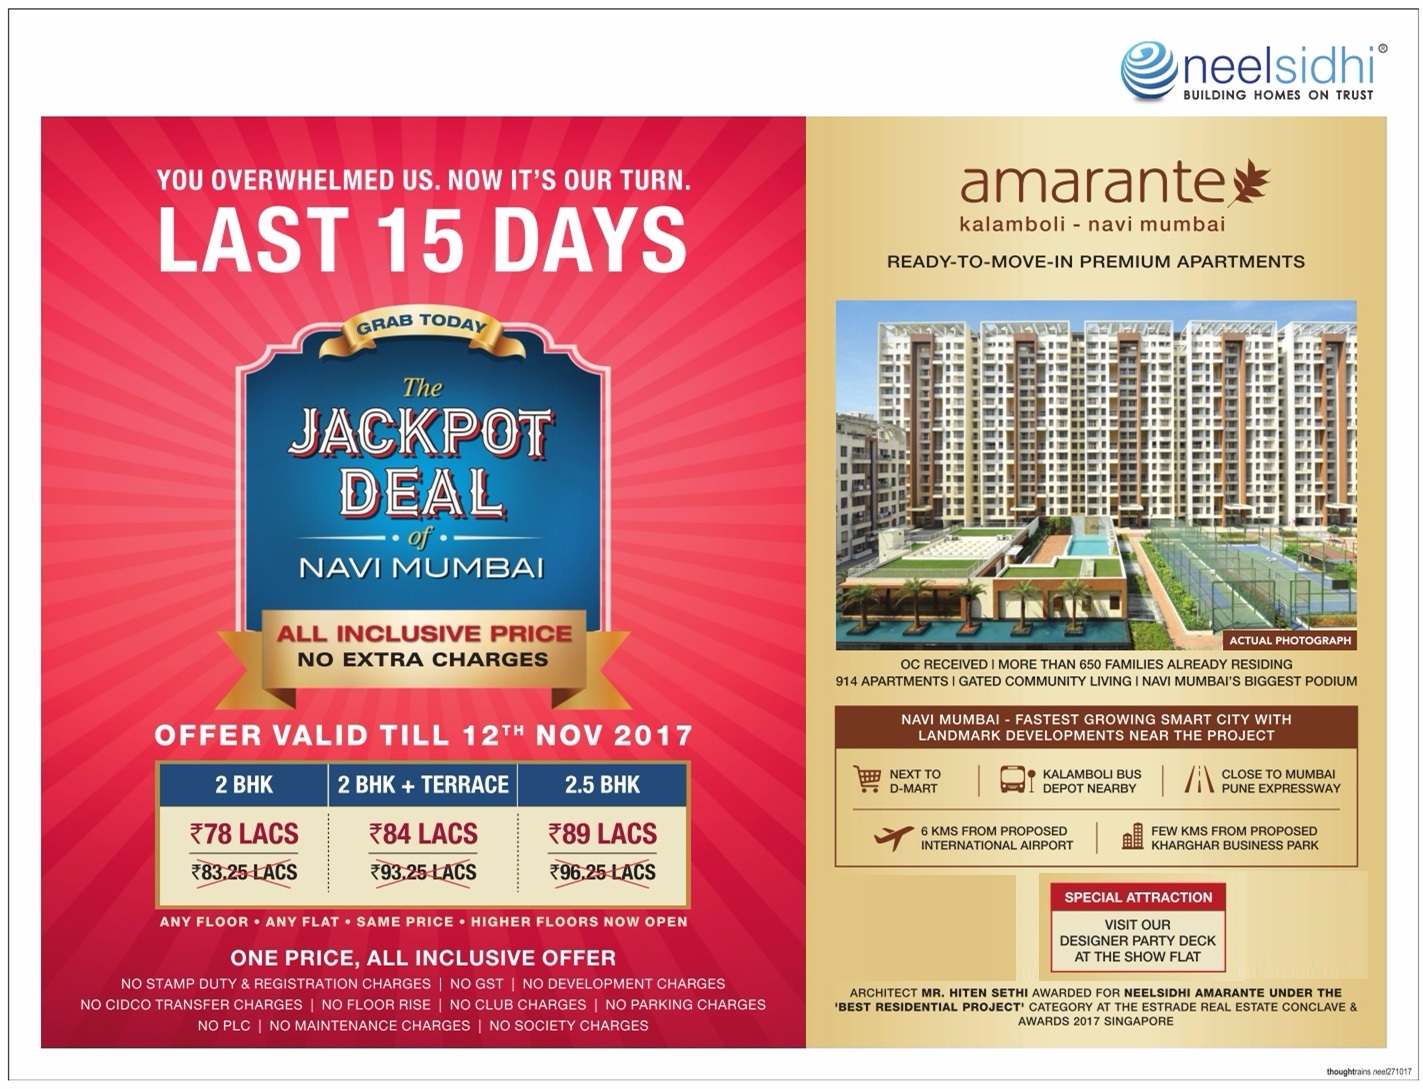 Grab today The Jackpot Deal at Neelsidhi Amarante in Navi Mumbai Update